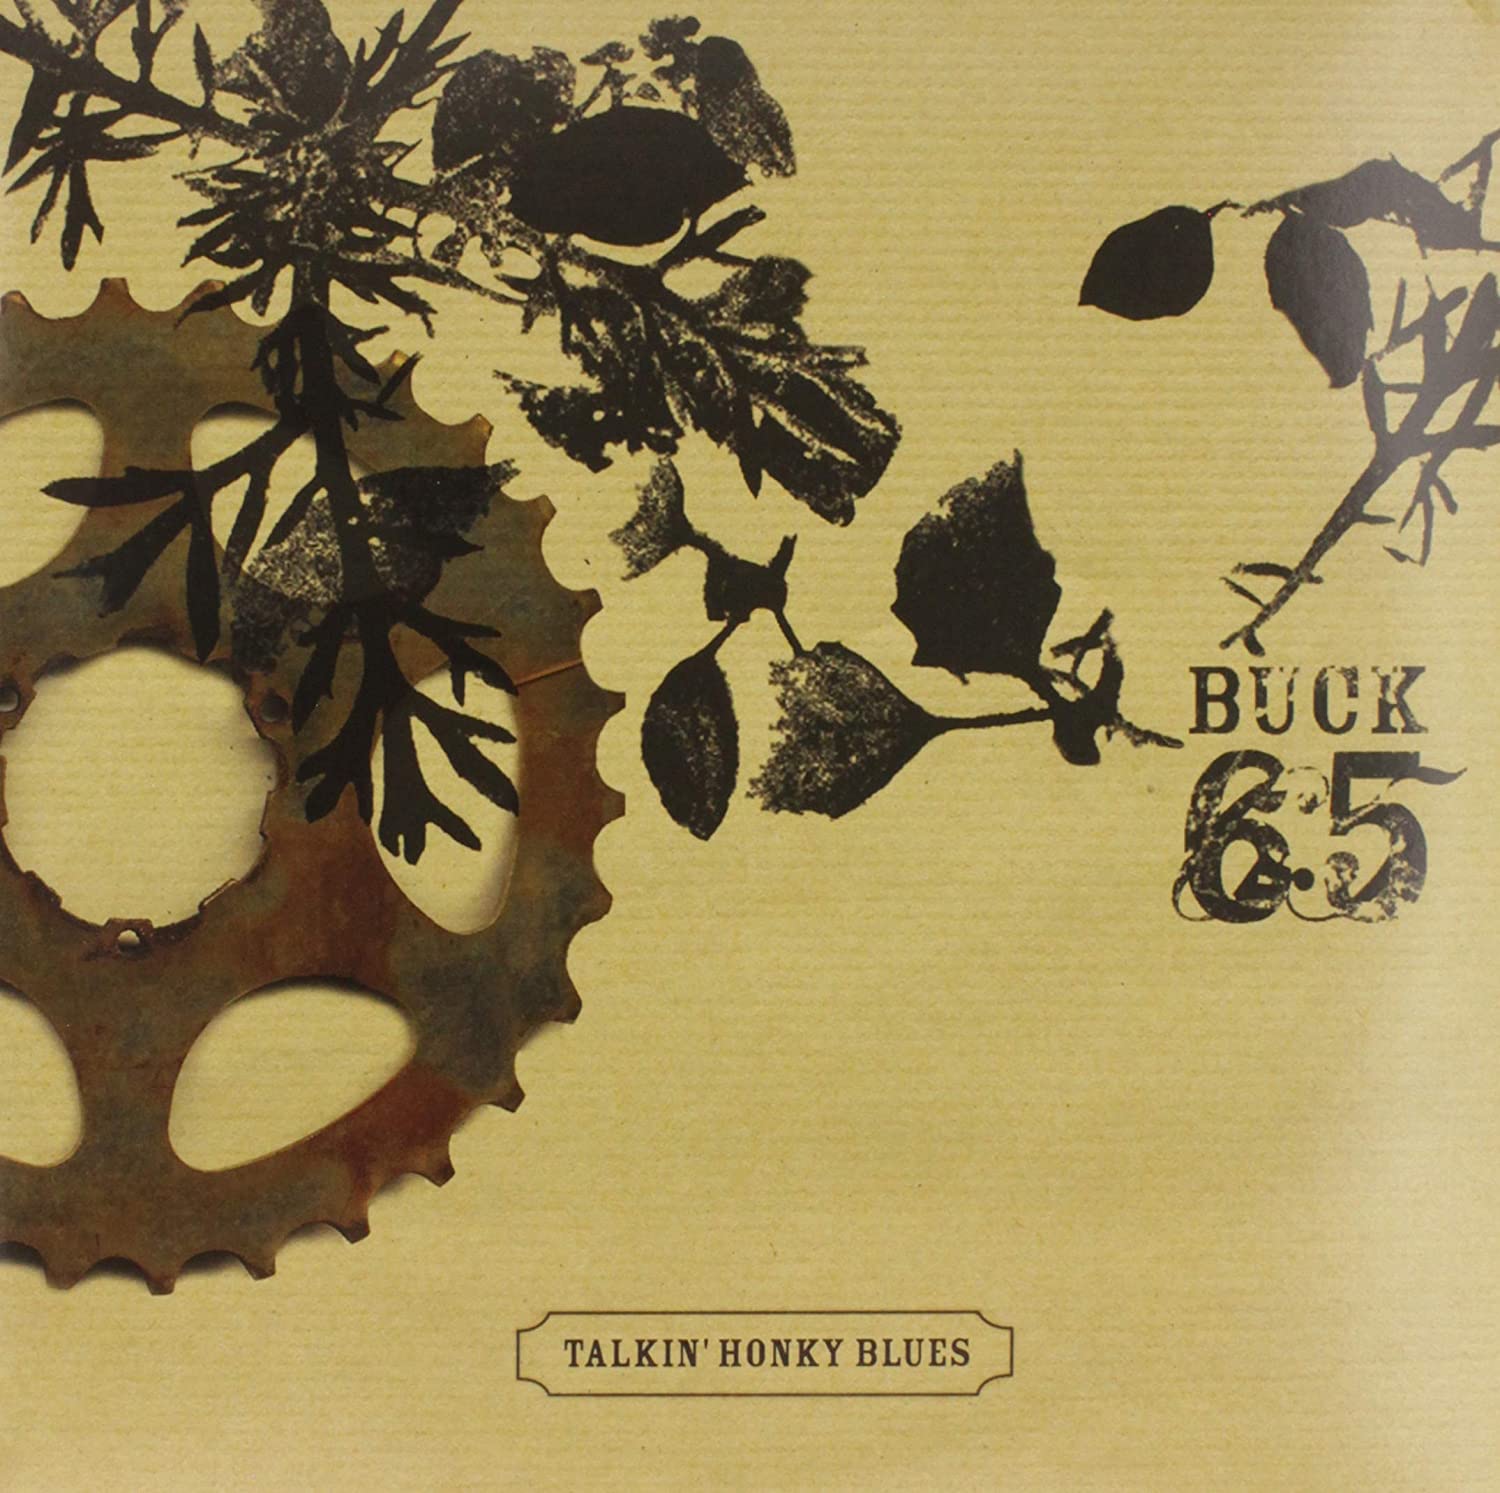 Buck 65 - Talkin' Honky Blues (Vinyl 2LP)